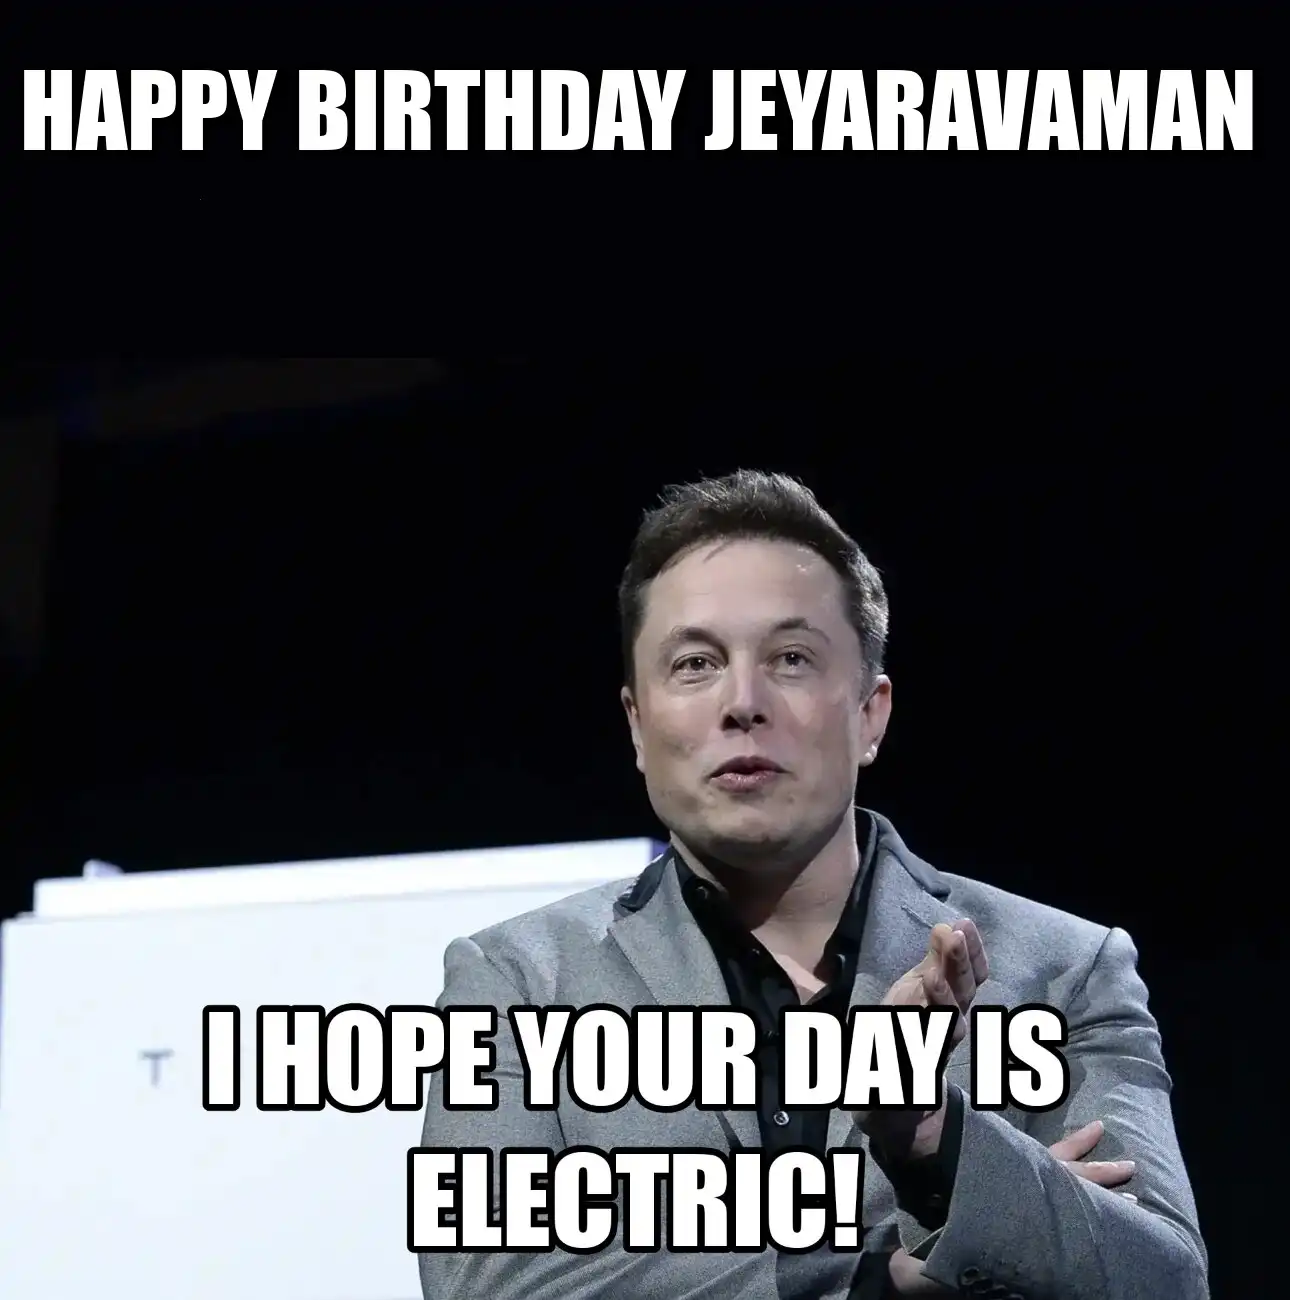 Happy Birthday Jeyaravaman I Hope Your Day Is Electric Meme